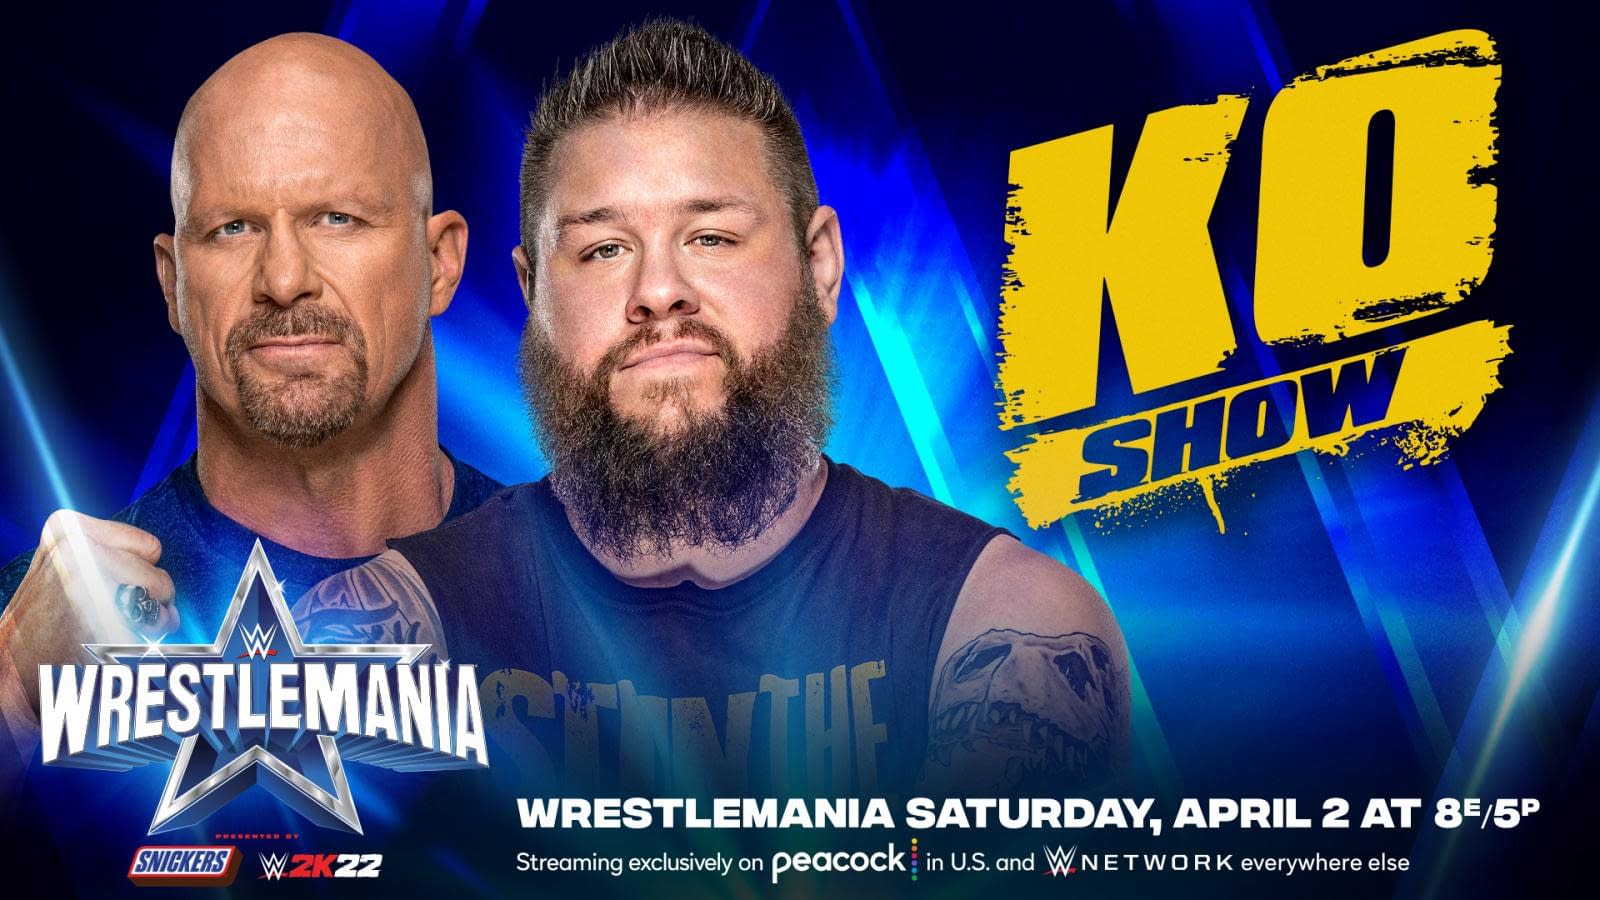 Stone Cold" Steve Austin Accepts Kevin Owens' WrestleMania Invite